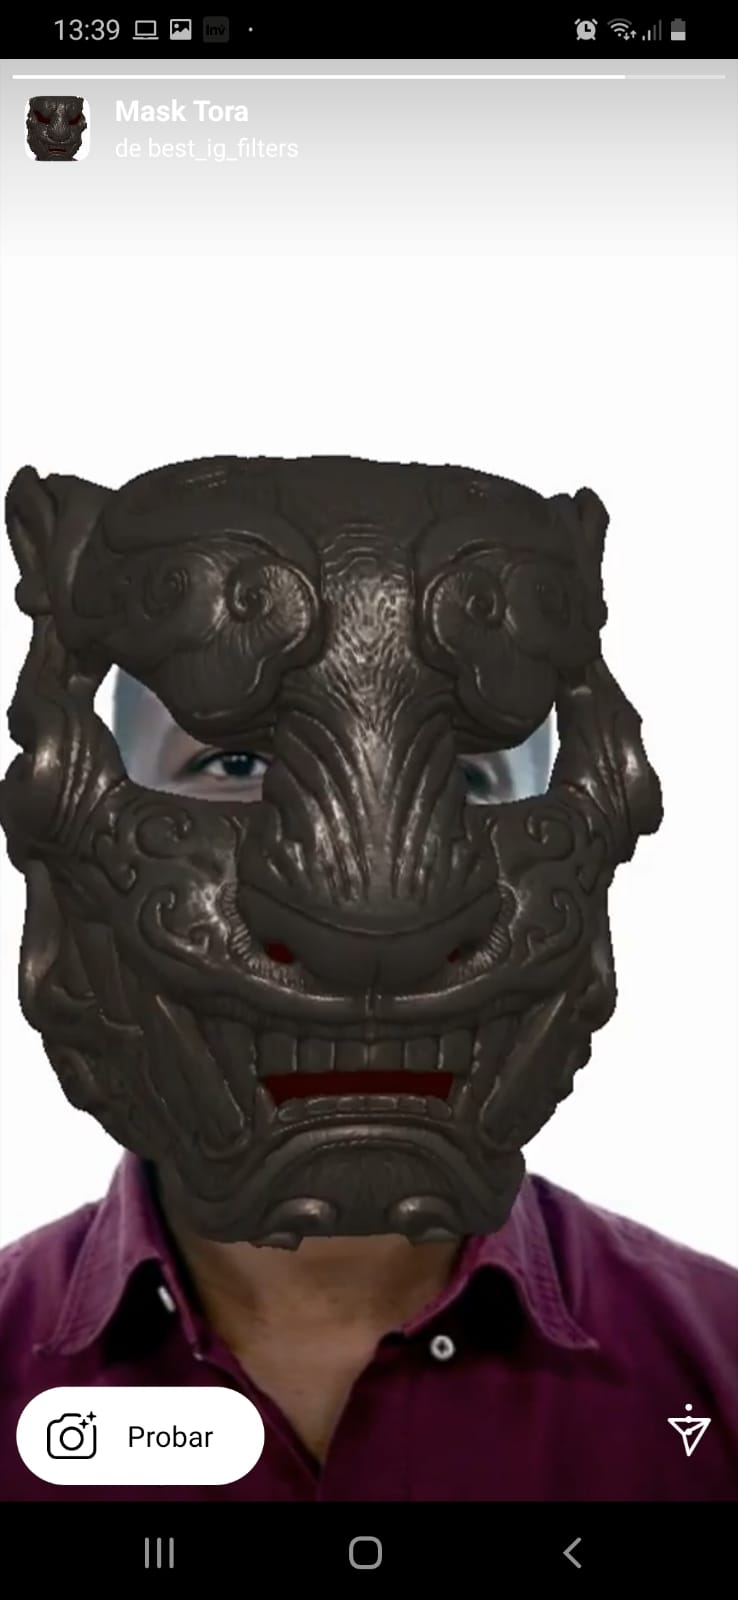 Mask Tora